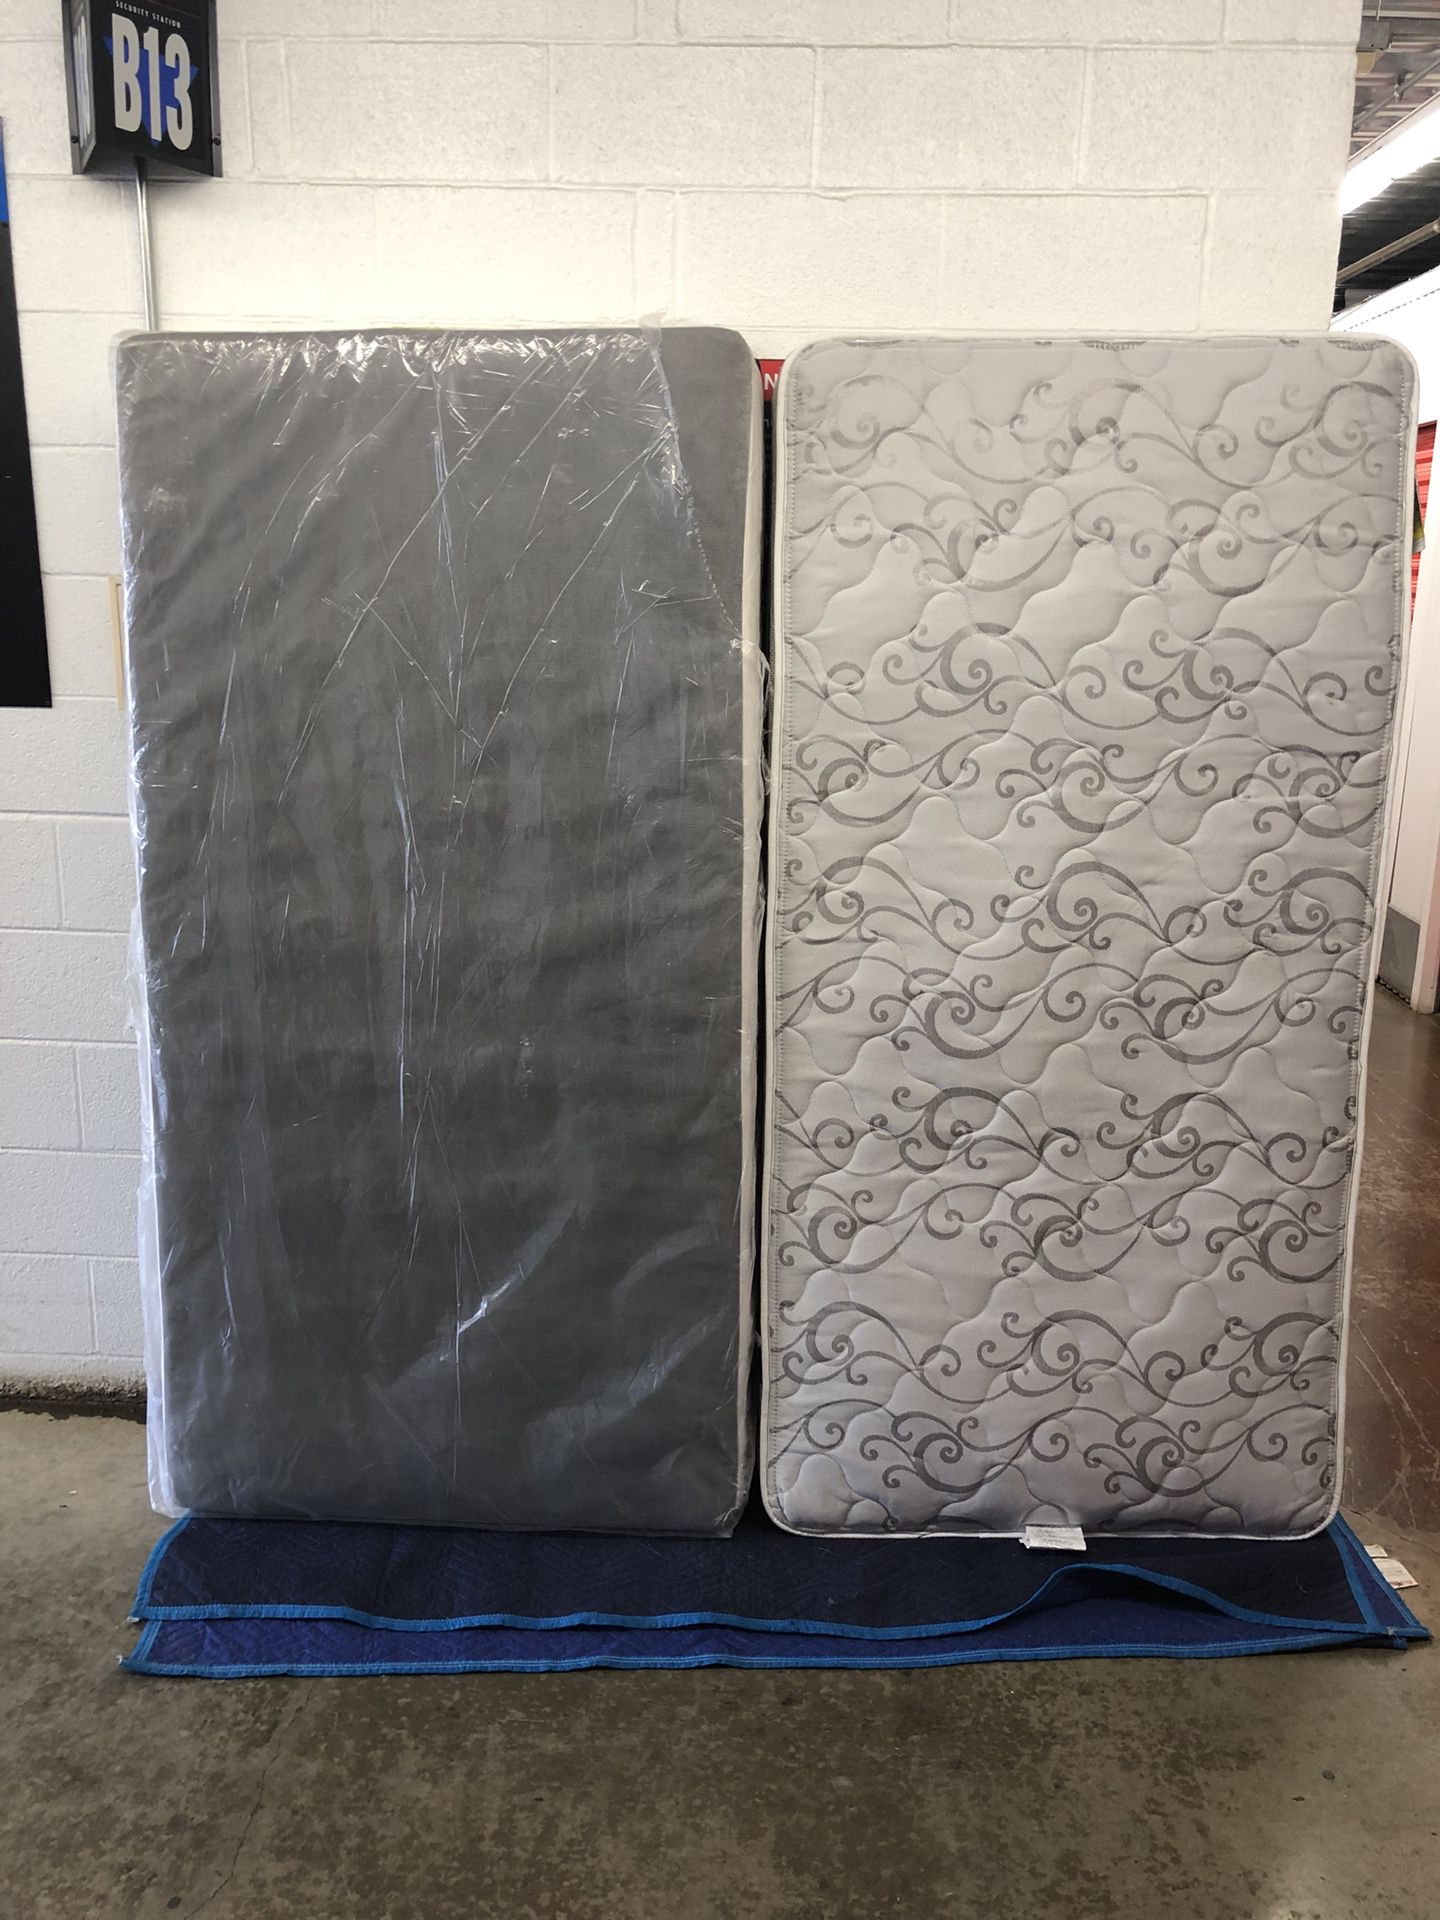 Serta twin mattress and board $135